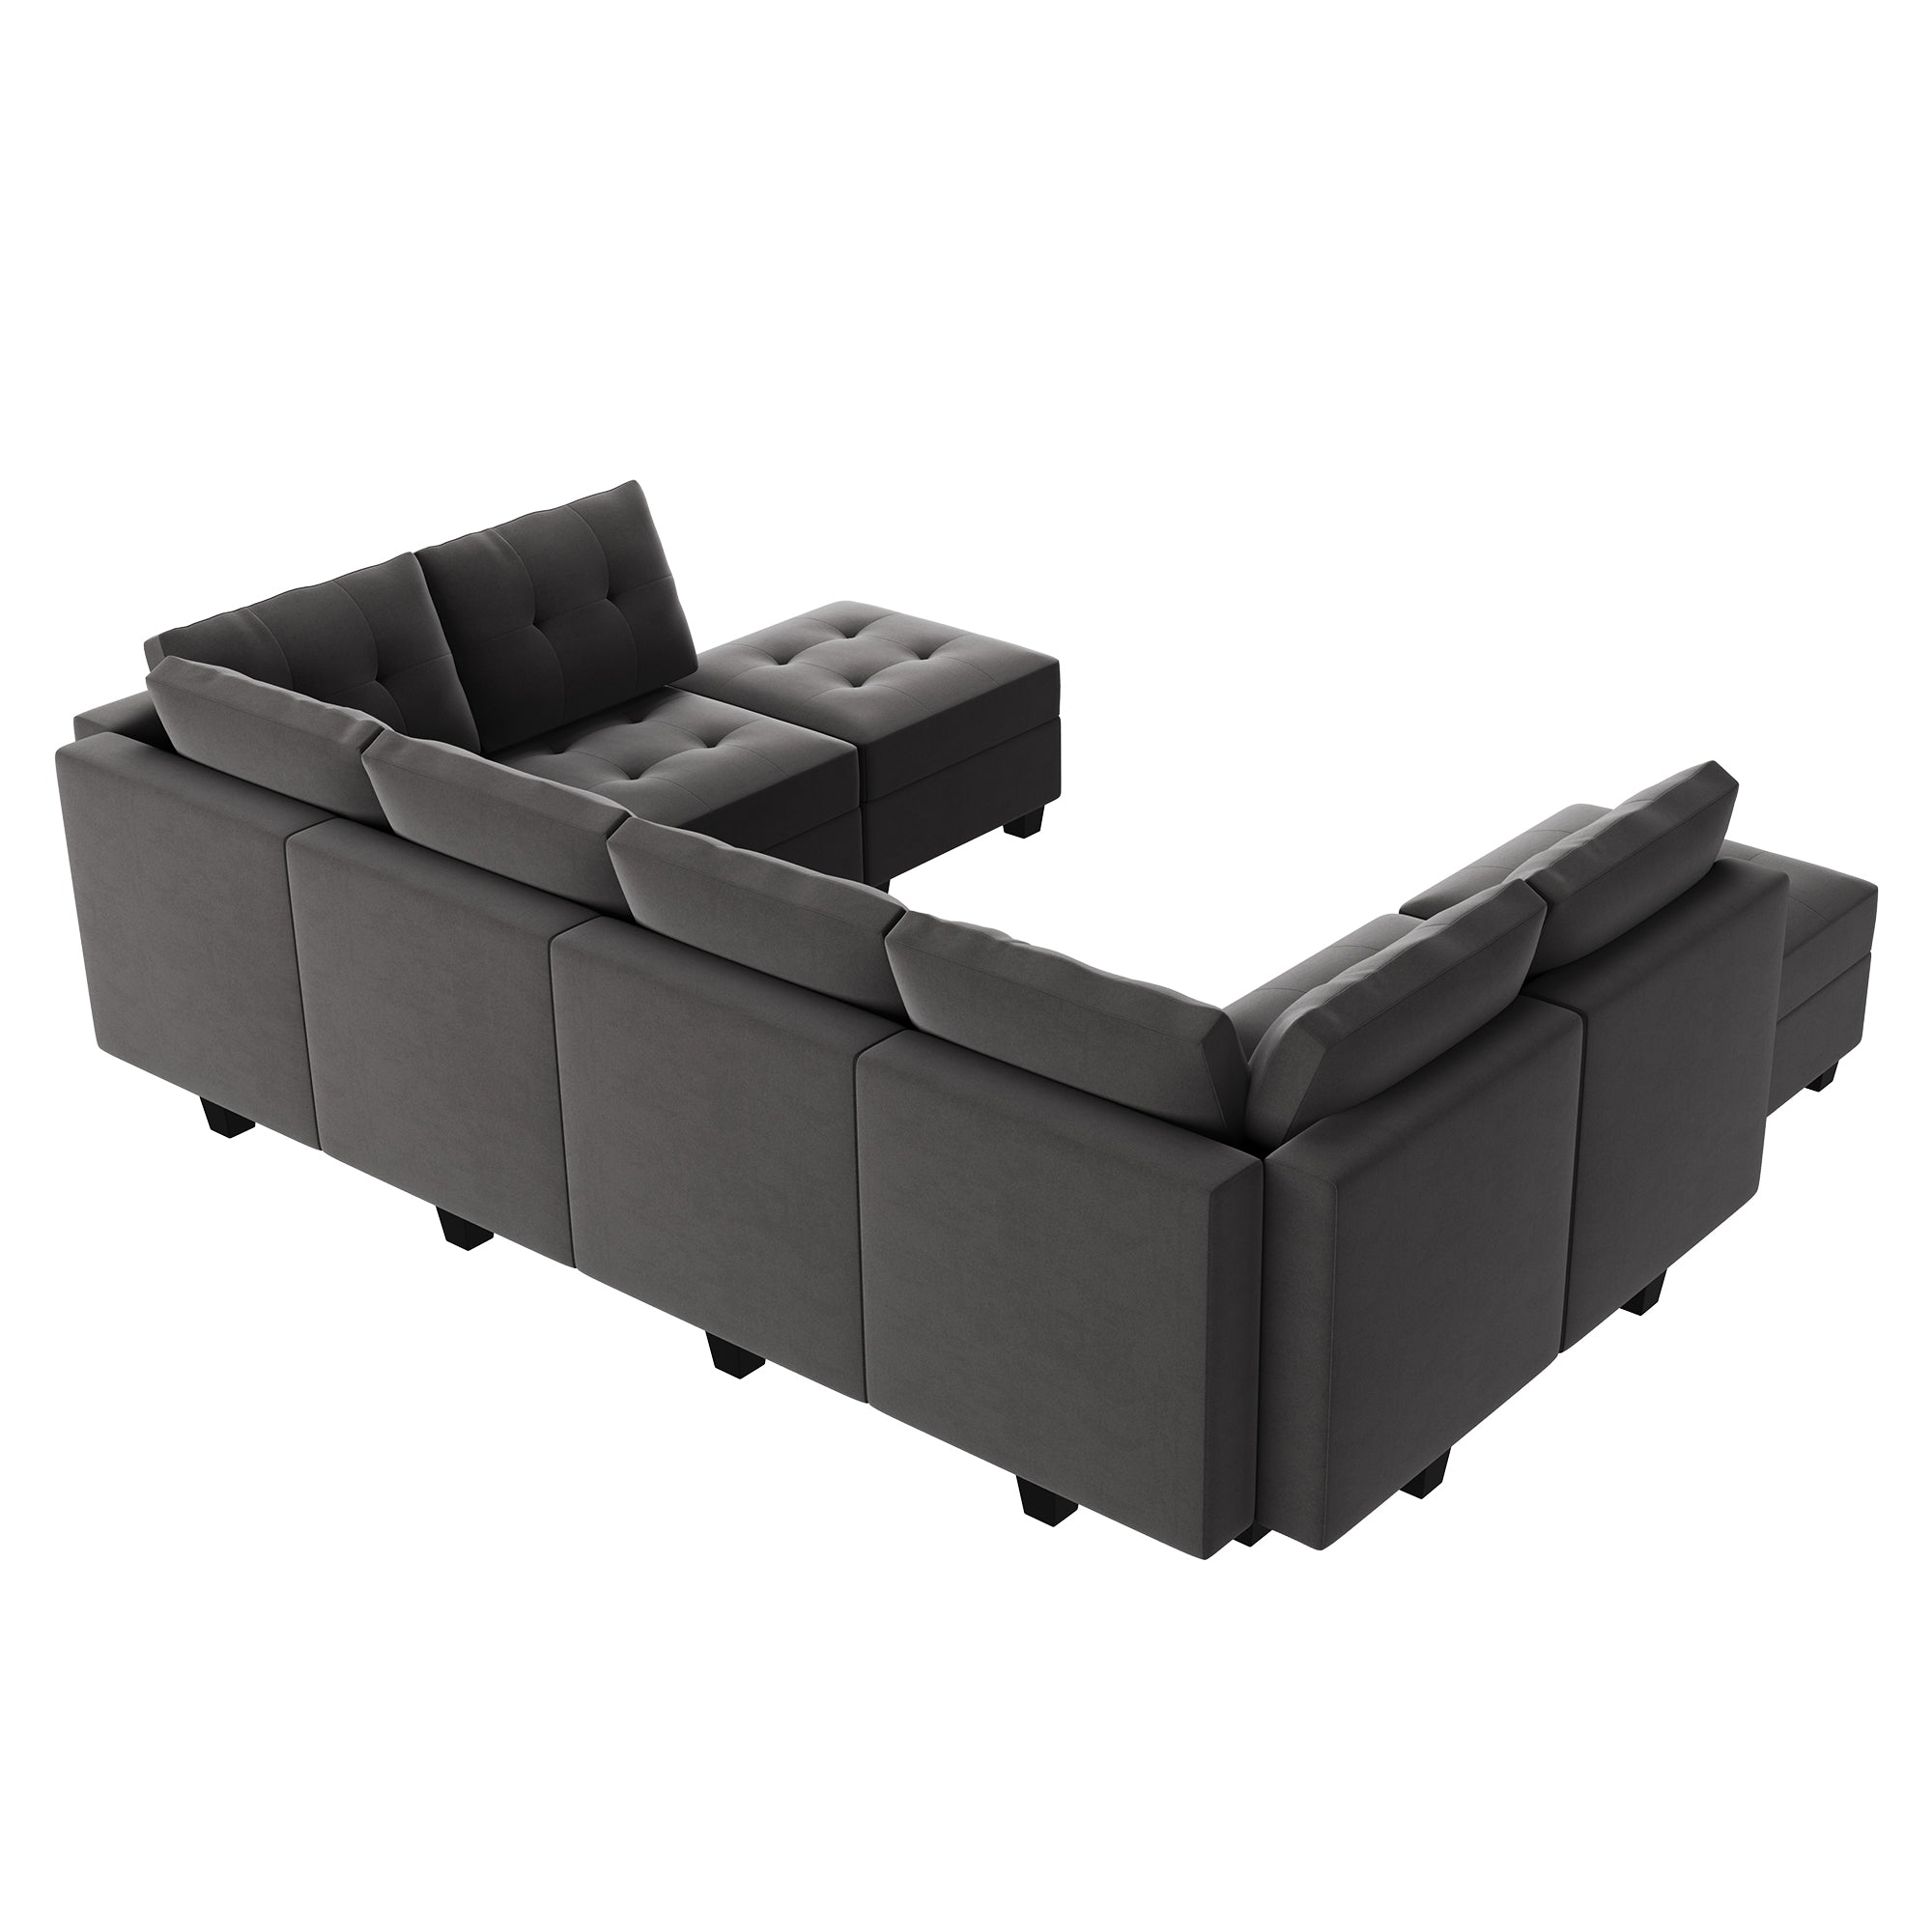 HONBAY Velvet Tufted 6-Seat U-Shaped Reversible Modular Sofa with Storage Ottoman